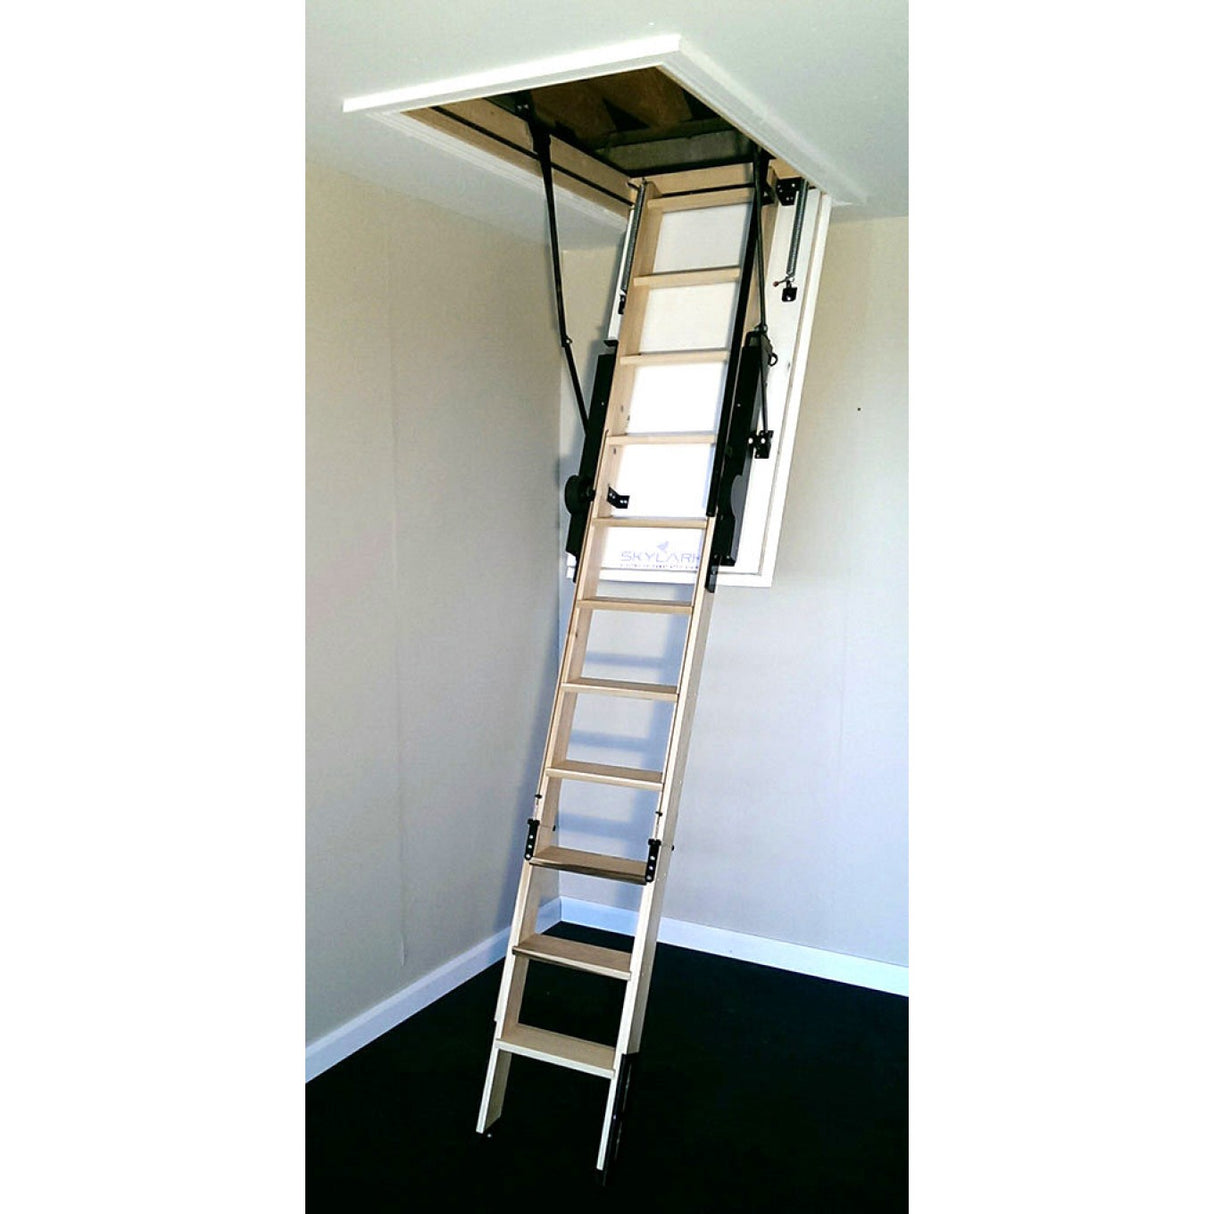 Skylark Electric Foldaway Loft Ladders